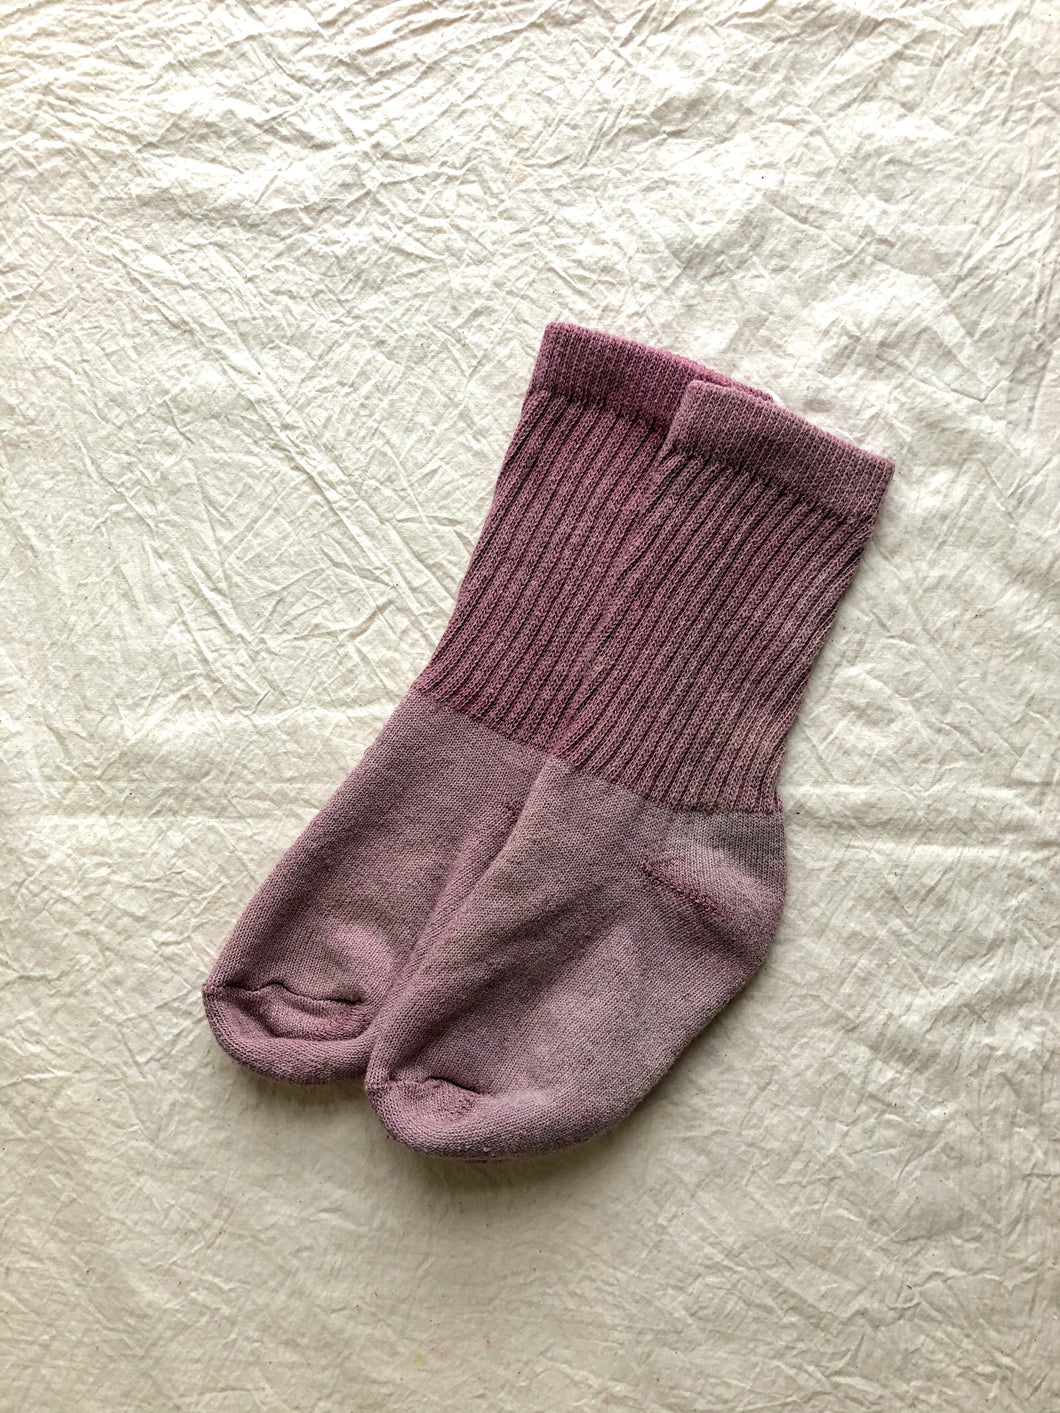 Botanical Dye Organic Cotton Socks - Berry - XS